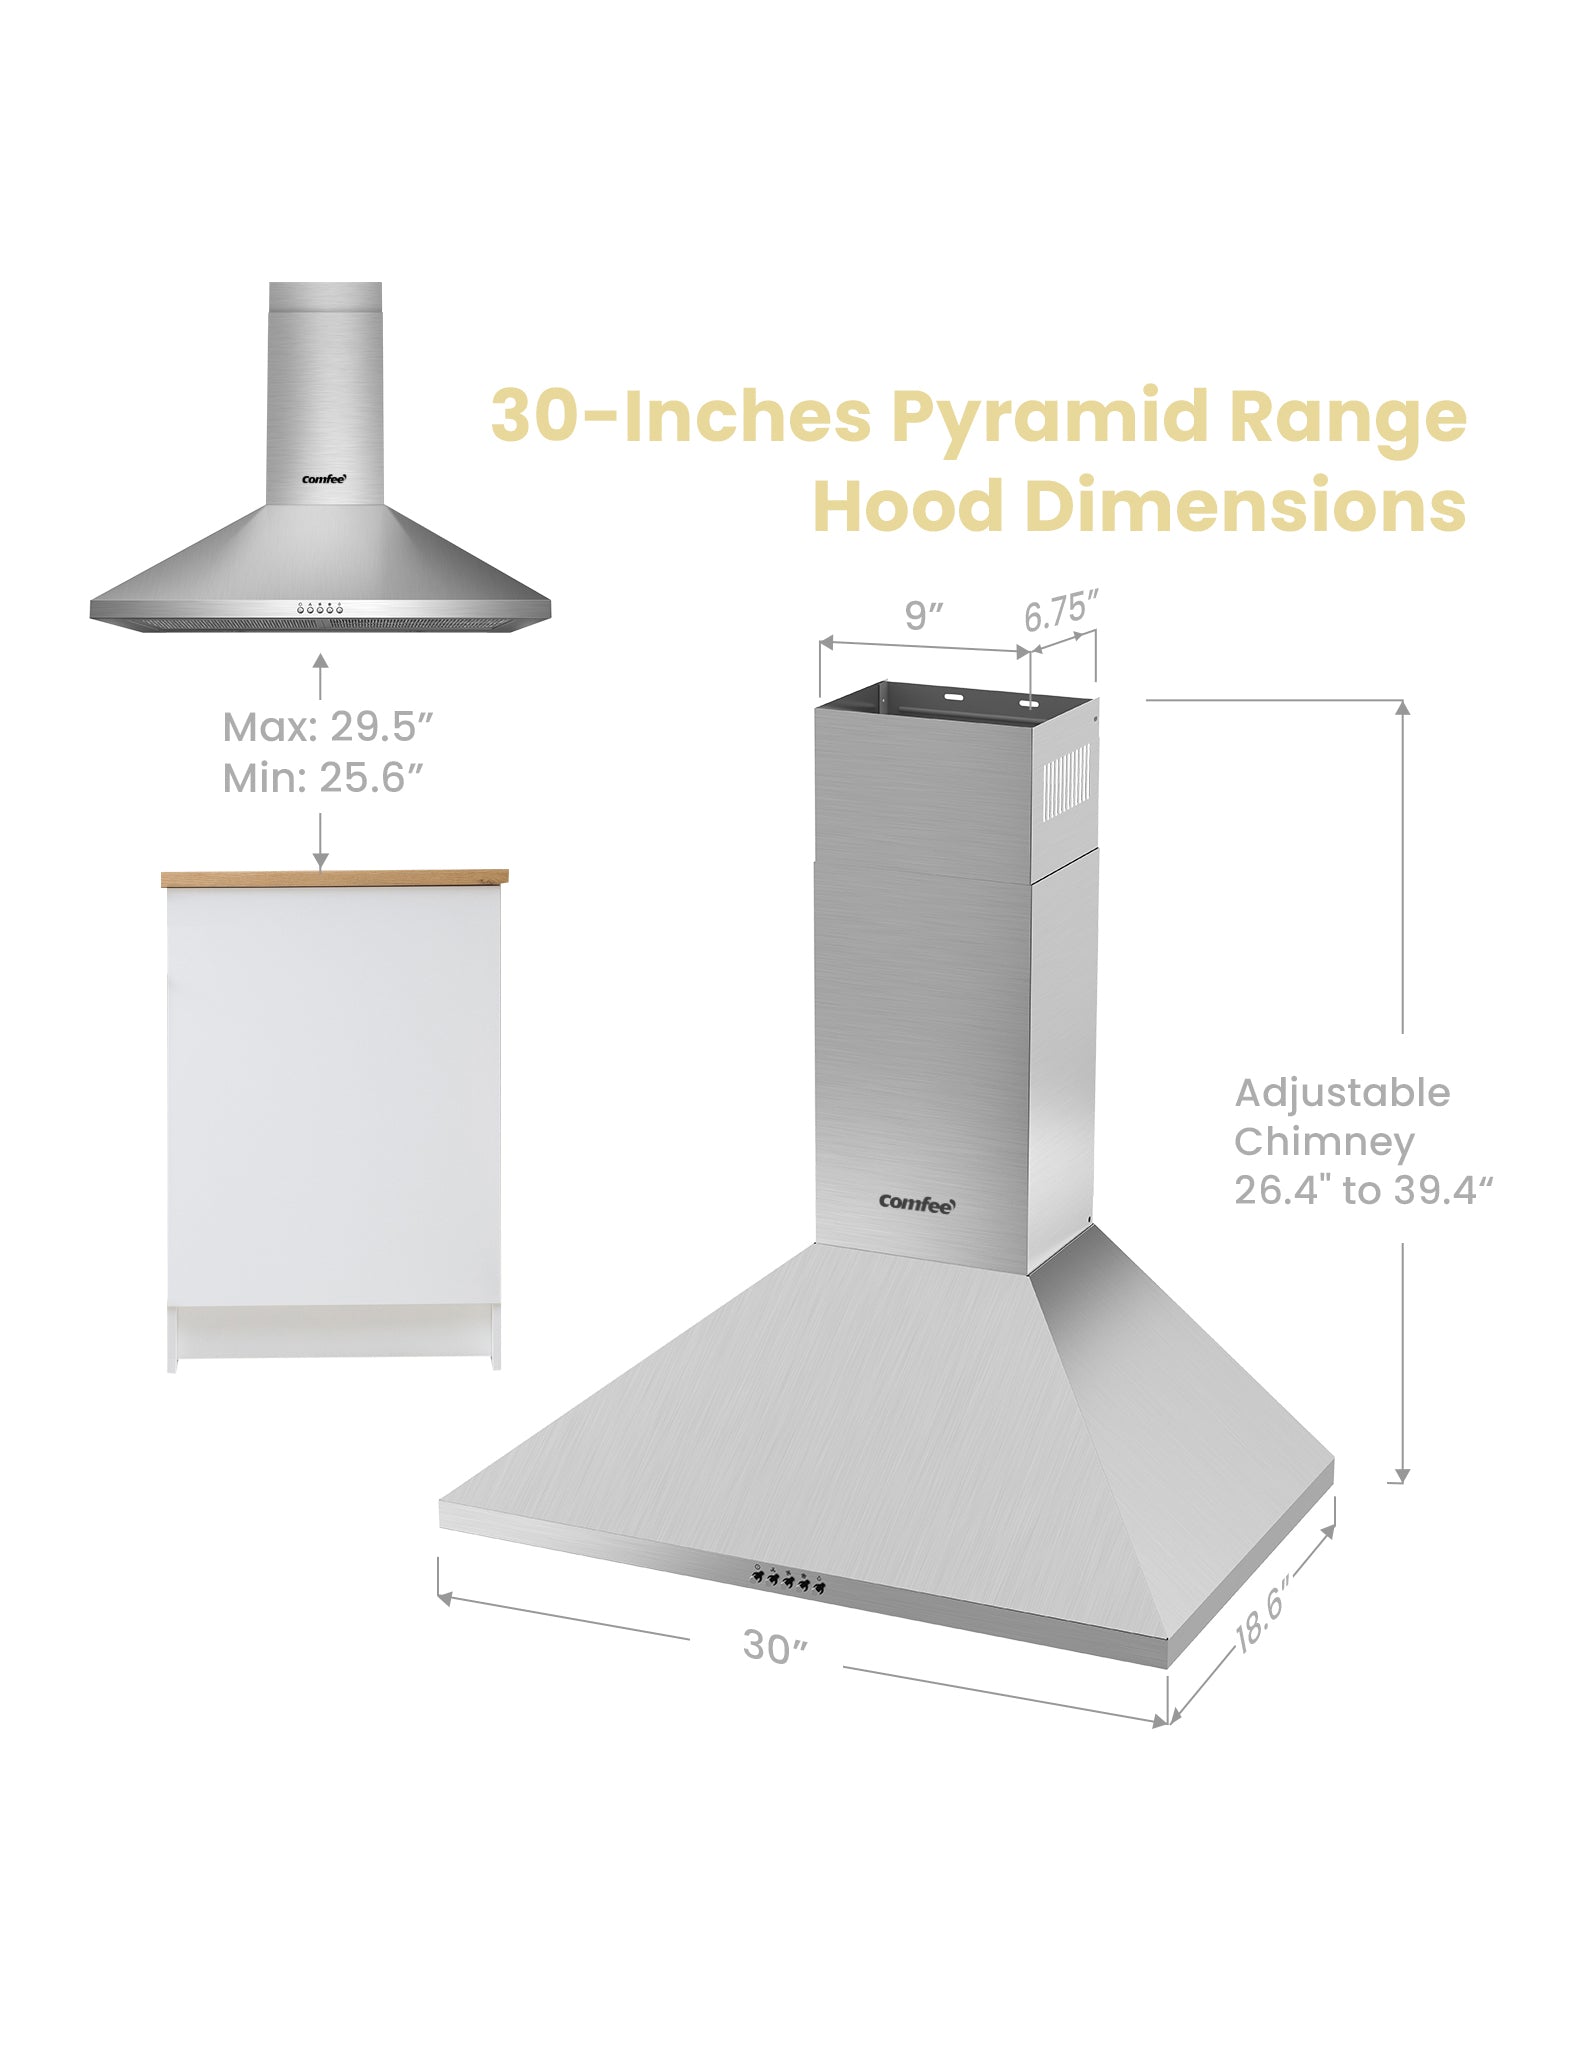 measurements of the comfee pyramid ducted range hood